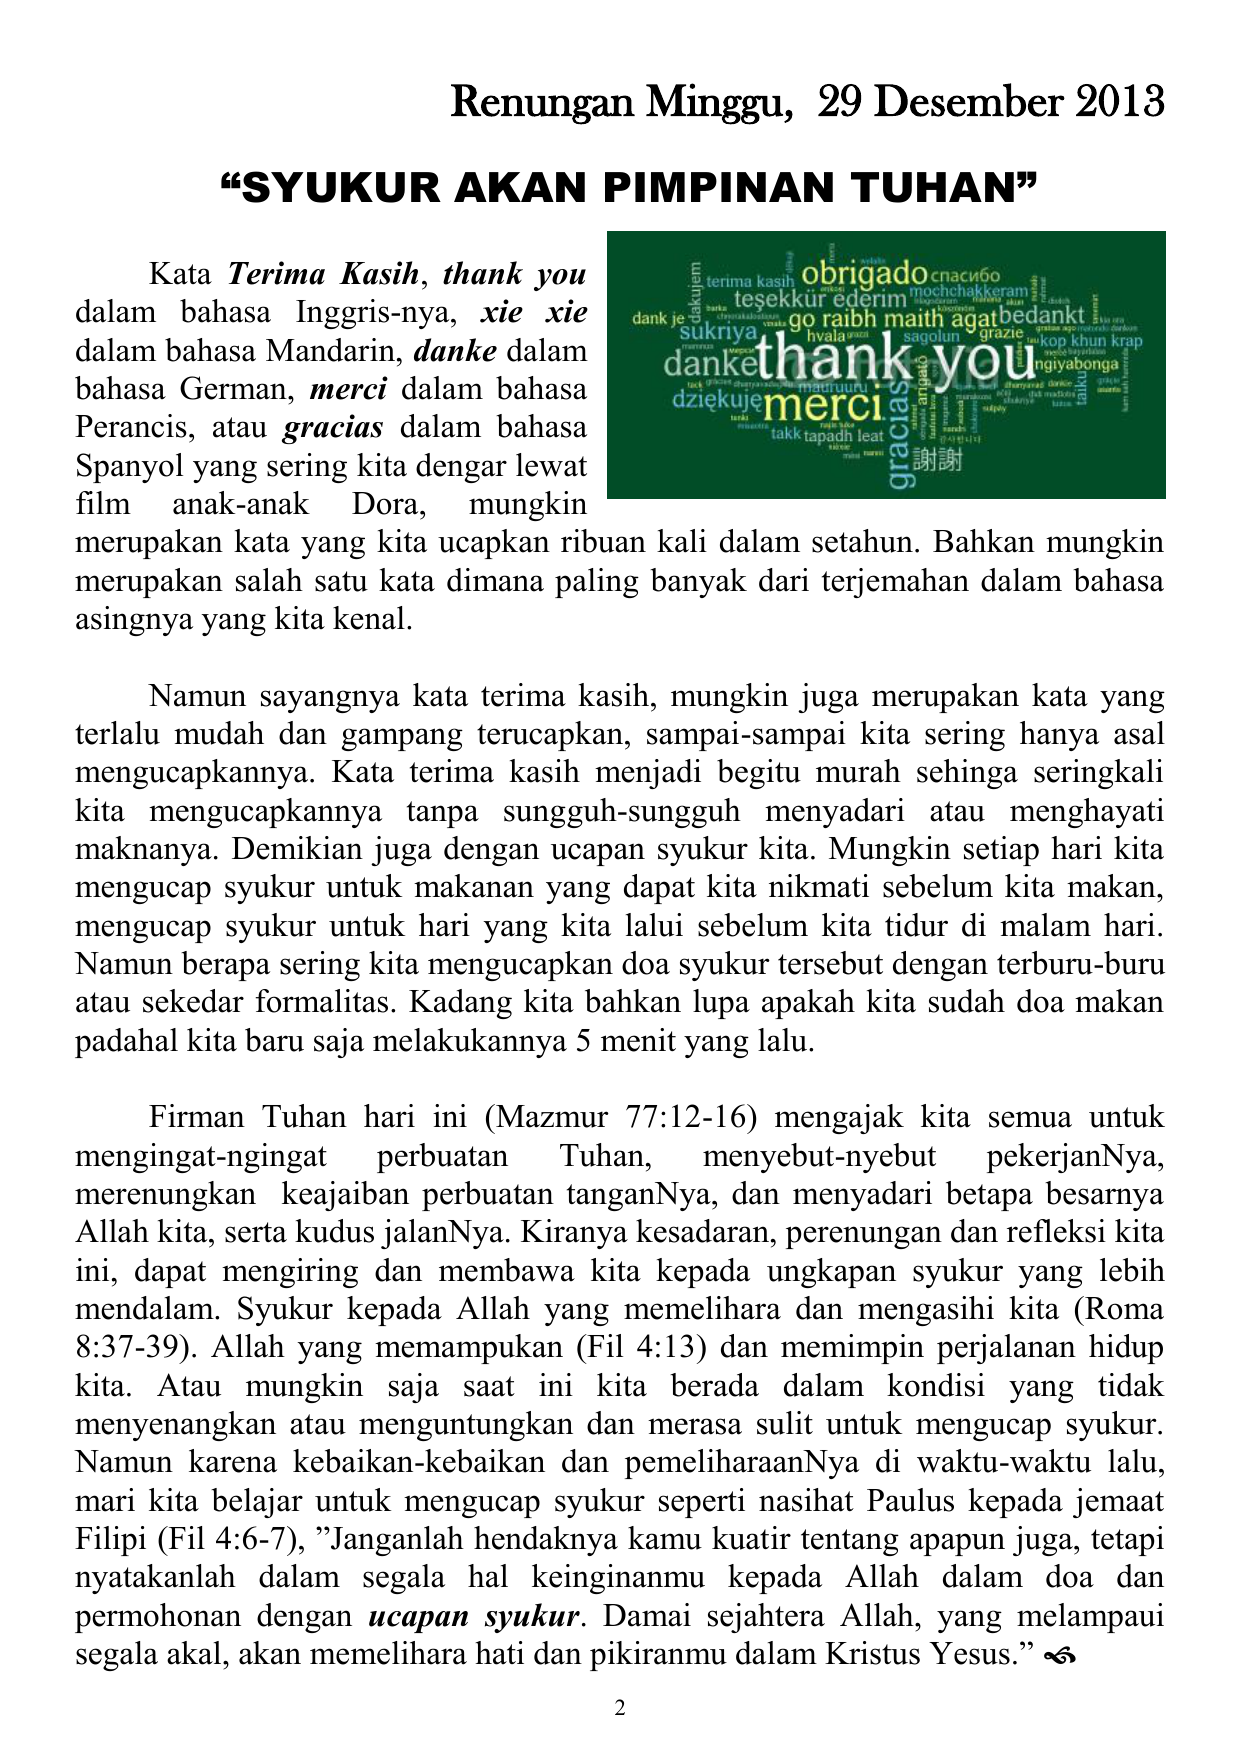 Renungan Minggu 29 Desember 2013 “SYUKUR AKAN PIMPINAN TUHAN” Kata Terima Kasih thank you dalam bahasa Inggris nya xie xie dalam bahasa Mandarin